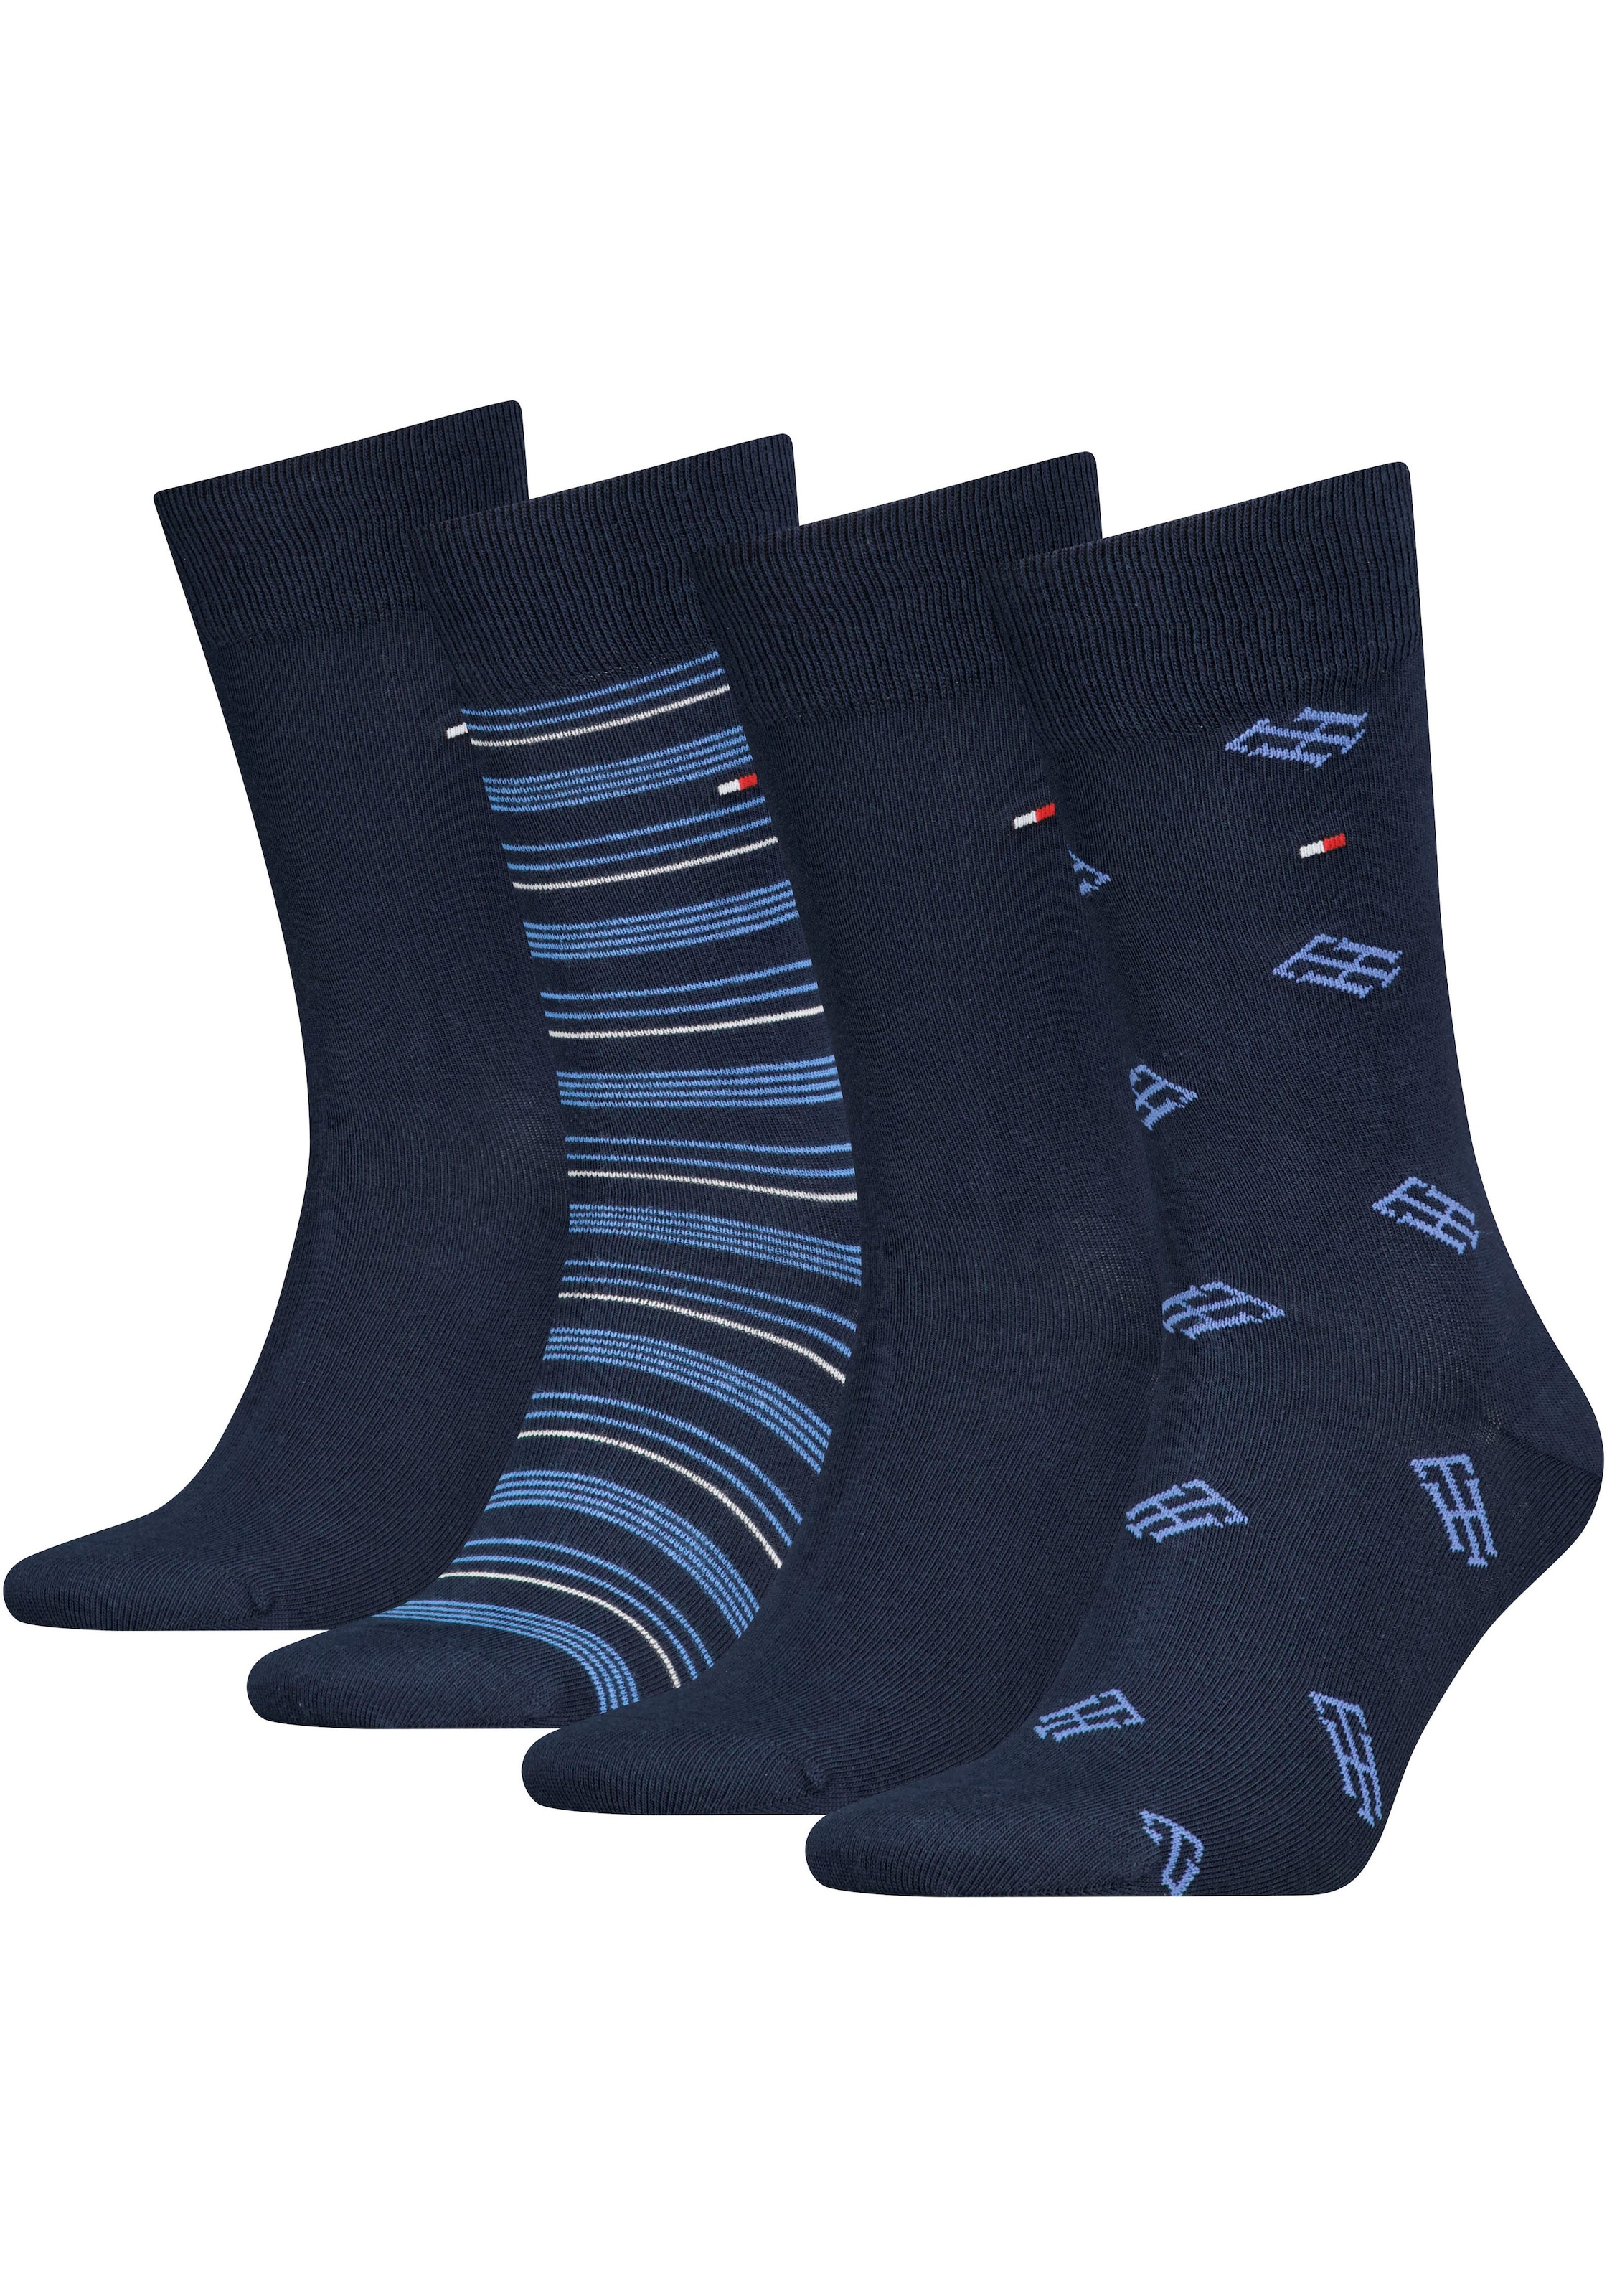 Socken, (4 Paar), mit Monogram-Design